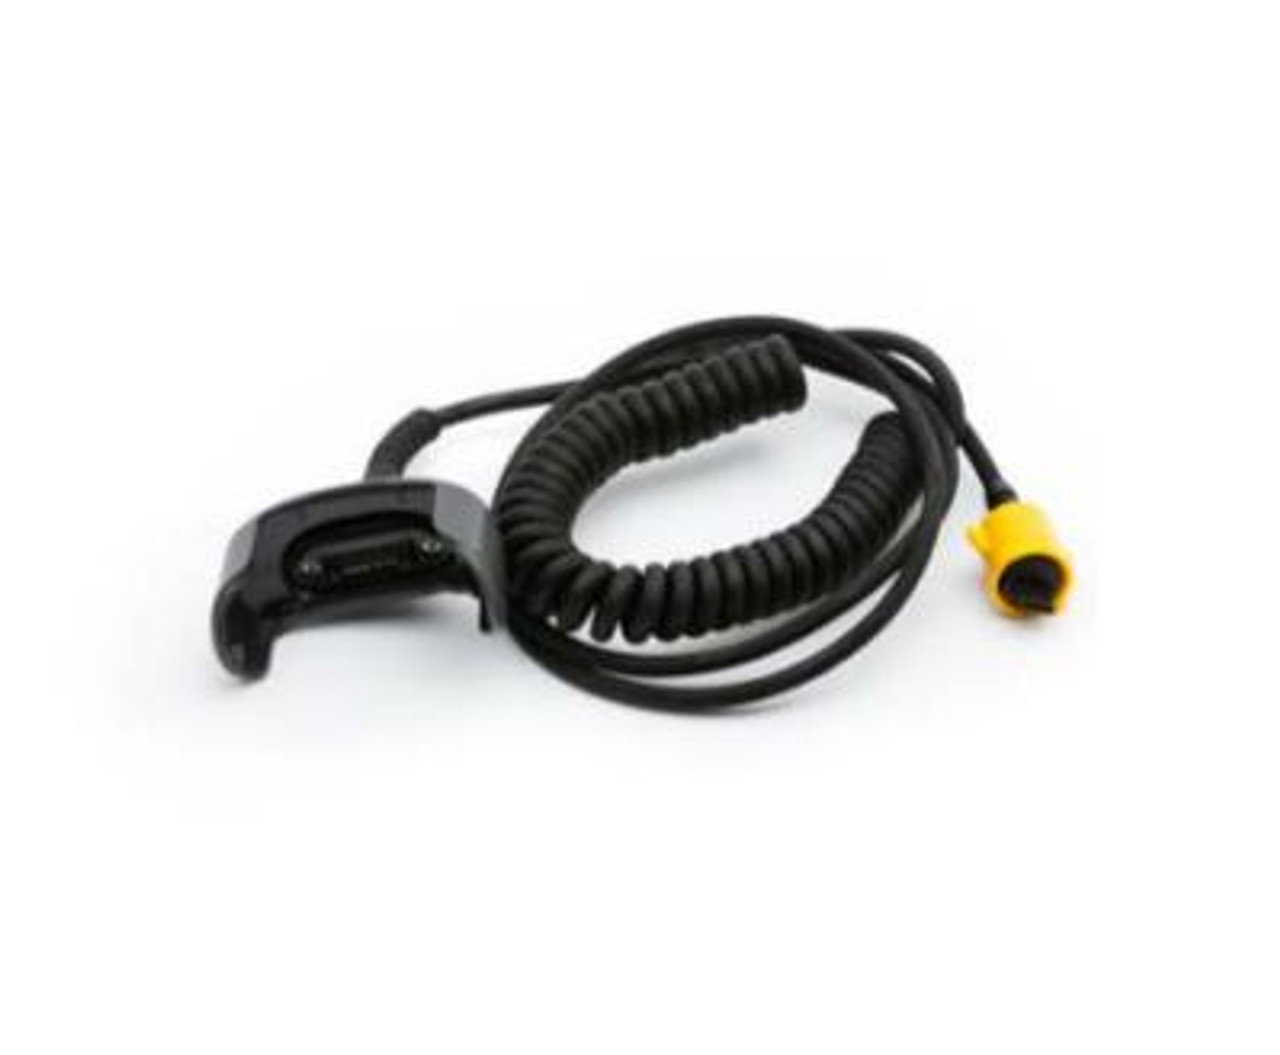 P1031365-058 | Zebra | serial cable Black, Yellow